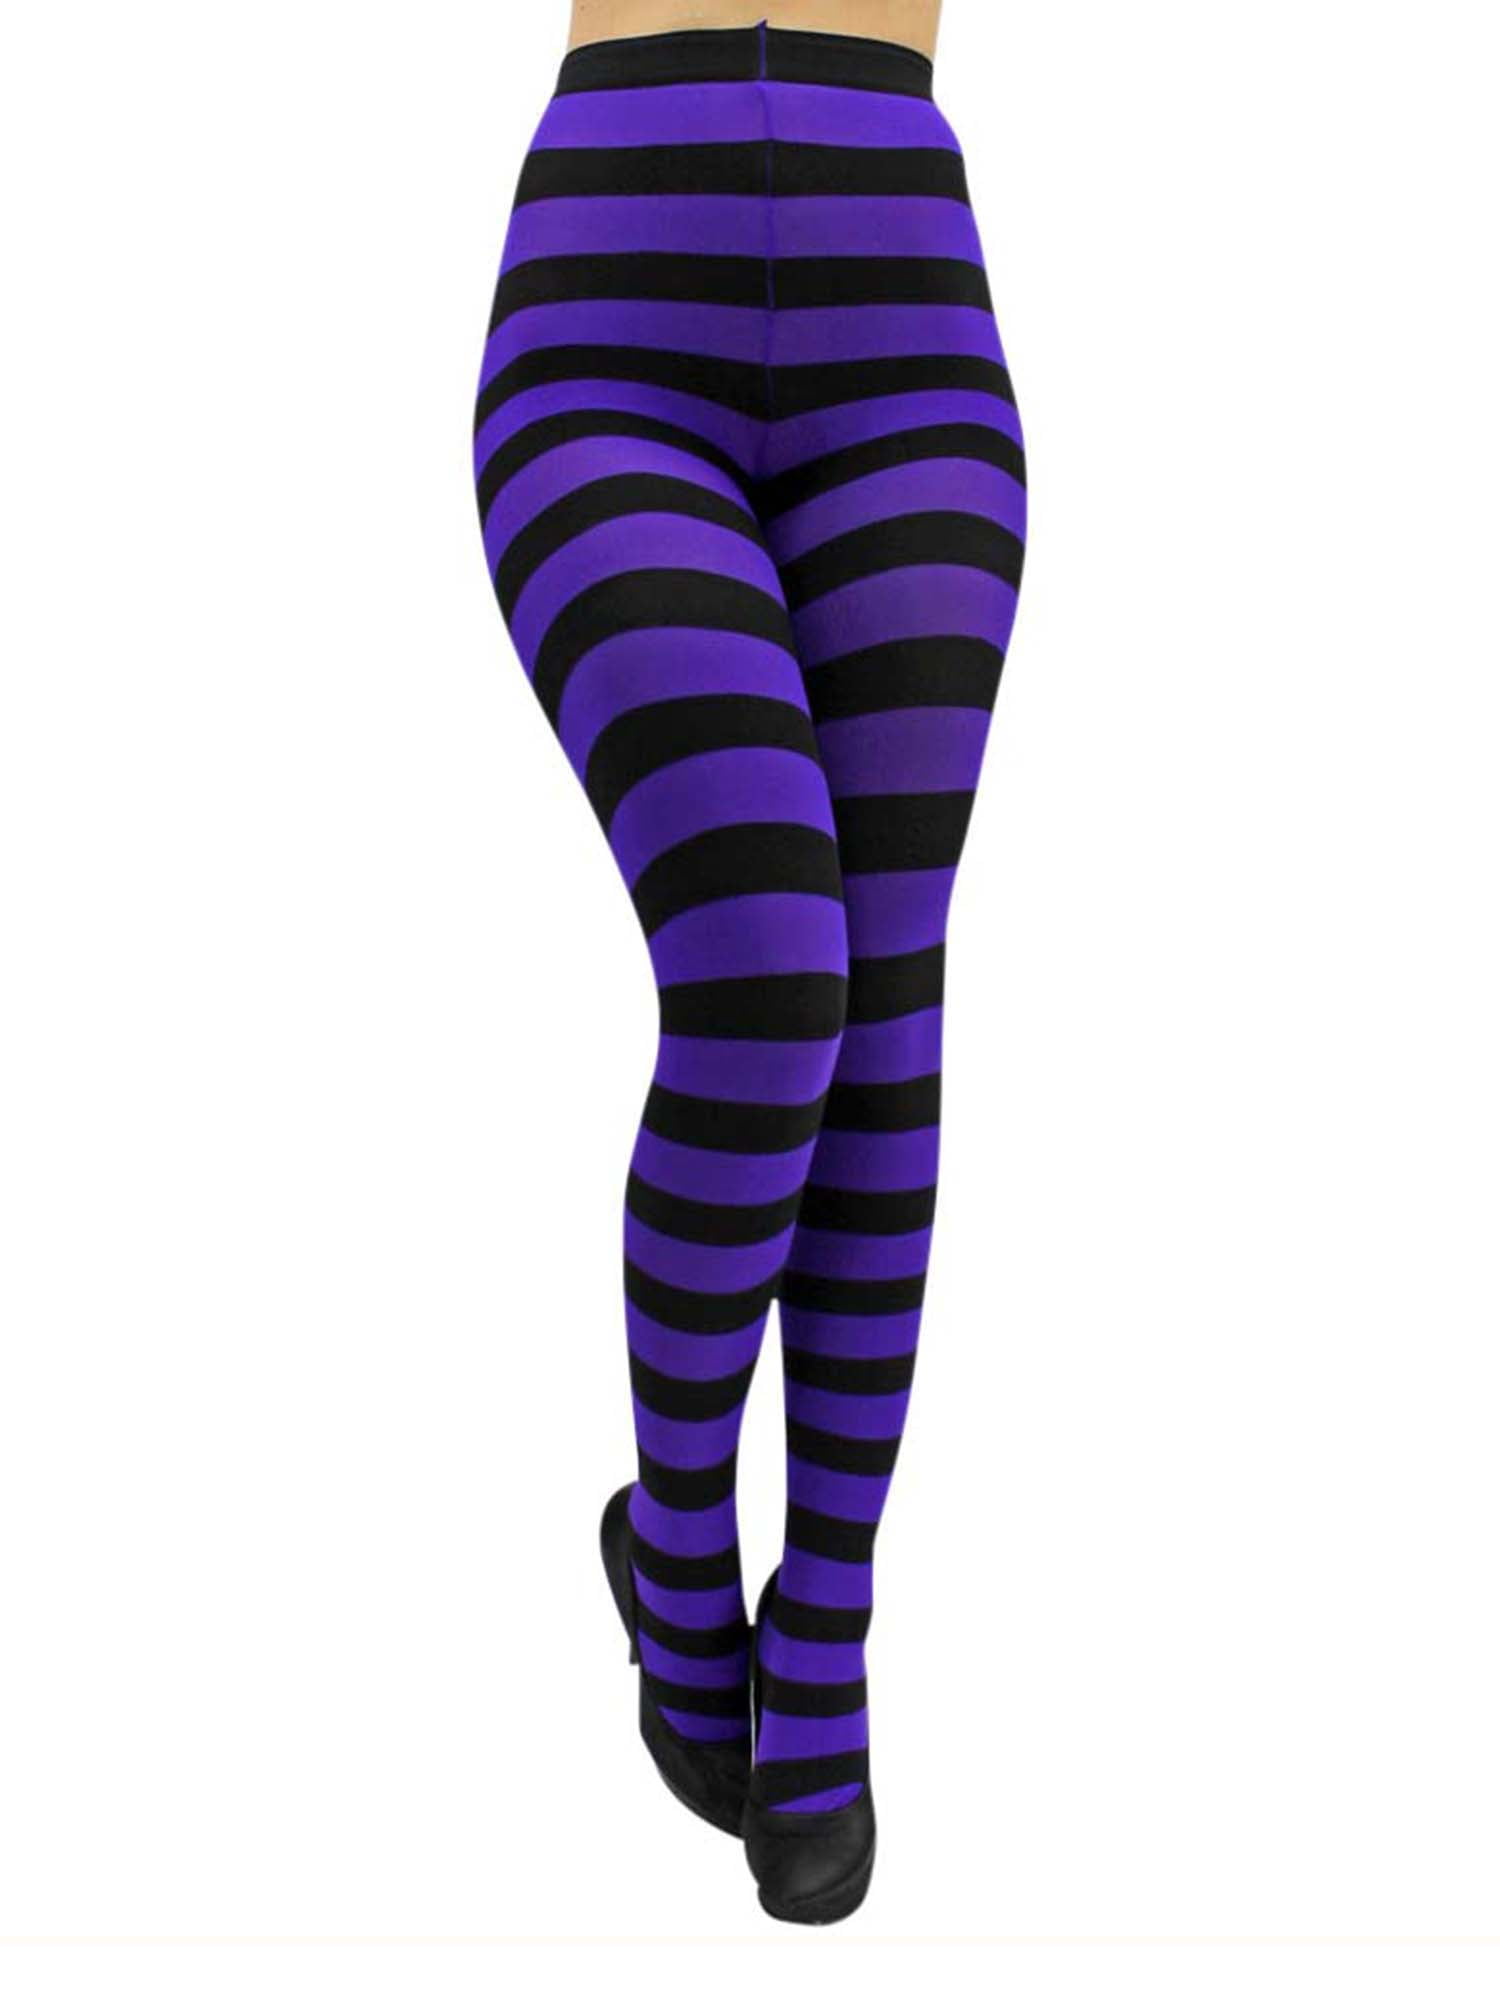 Purple & Black Horizontal Striped Tights